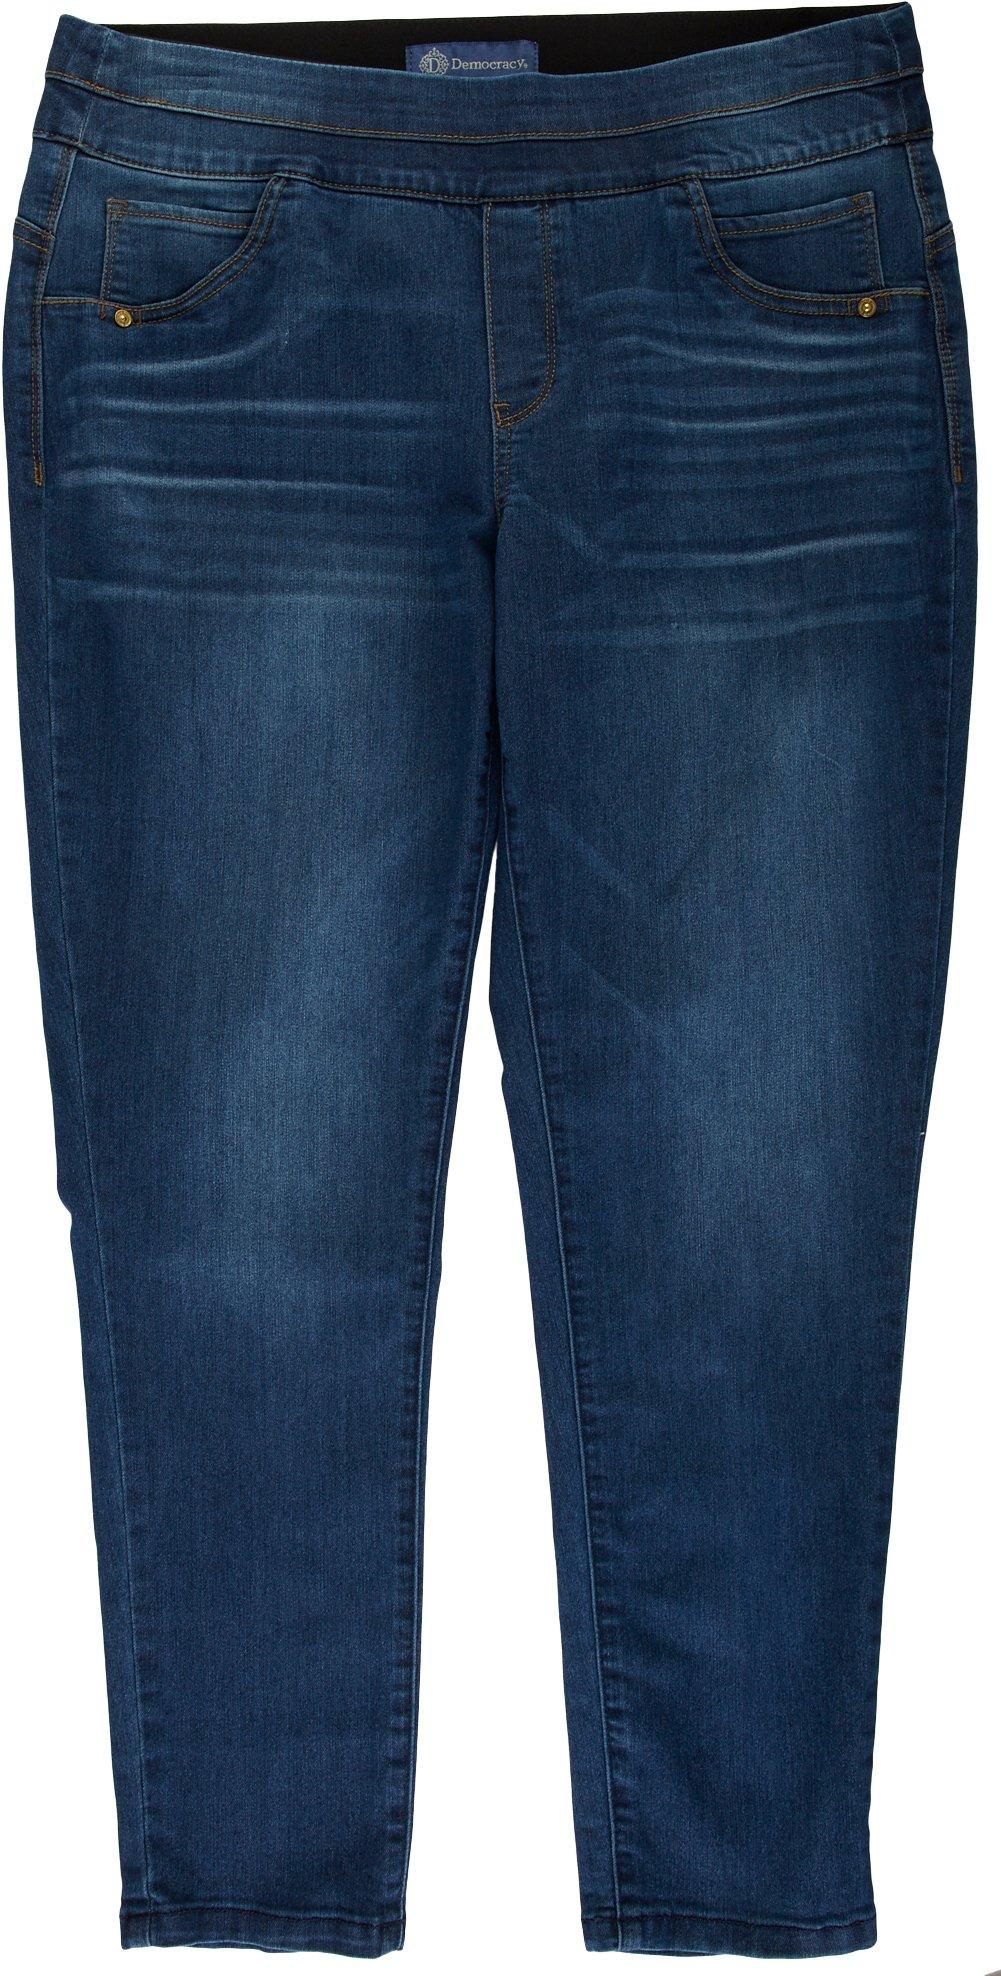 bealls democracy jeans